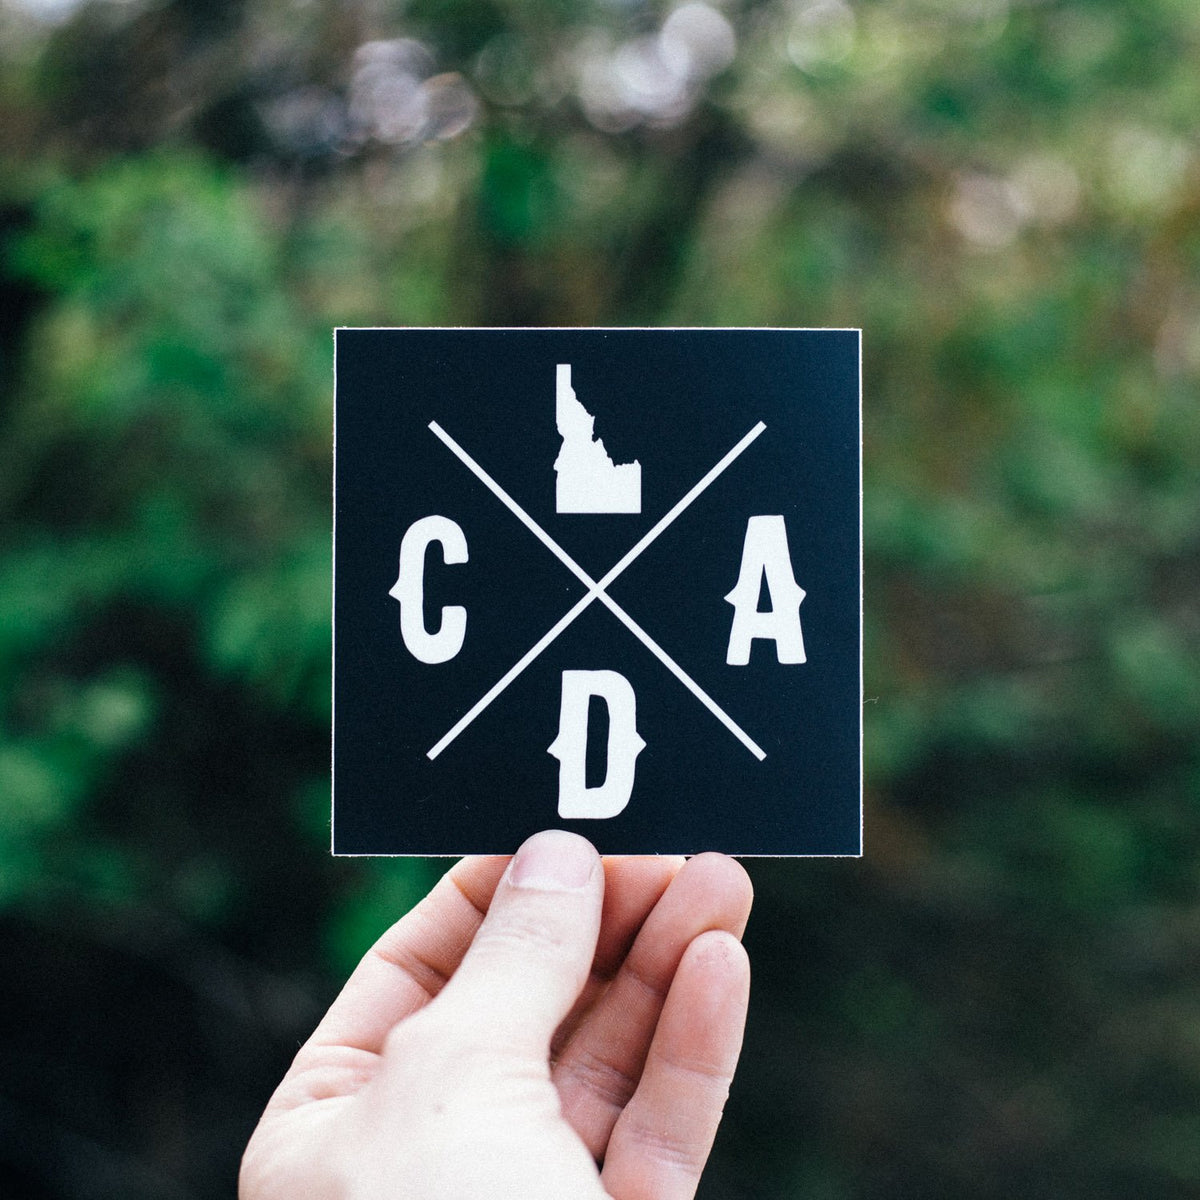 Bold CDA Idaho Logo Square Sticker